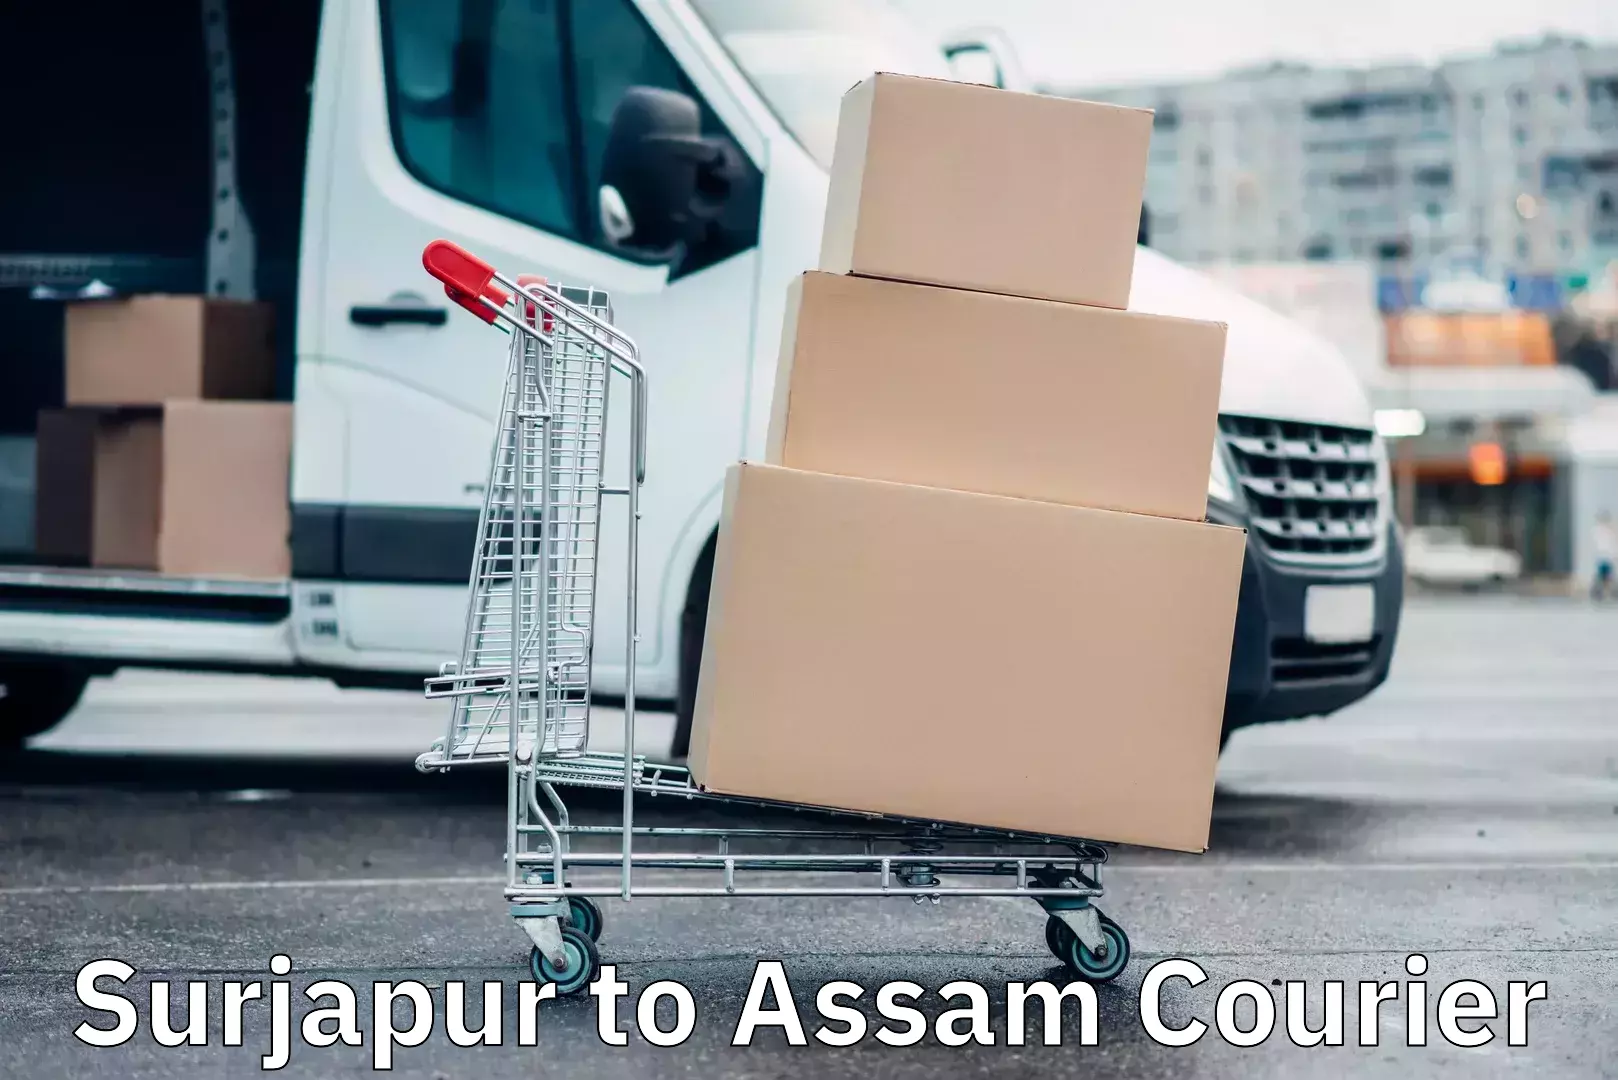 Express package handling Surjapur to Assam